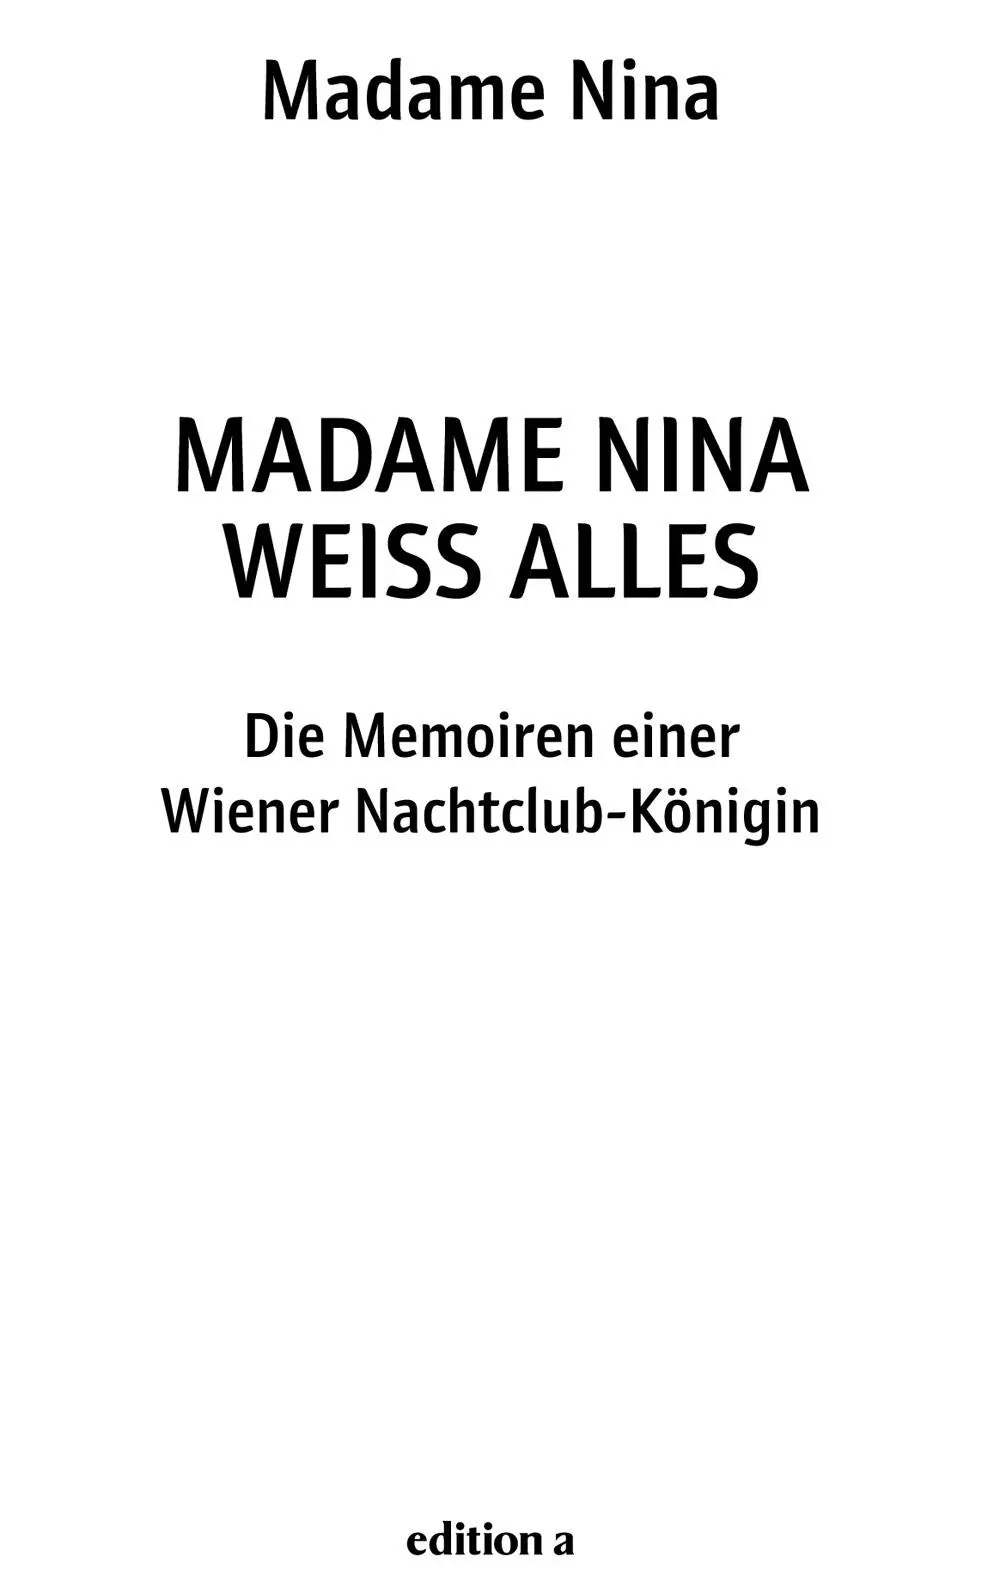 Madame Nina Madame Nina weiß alles Alle Rechte vorbehalten 2017 edition a - фото 1